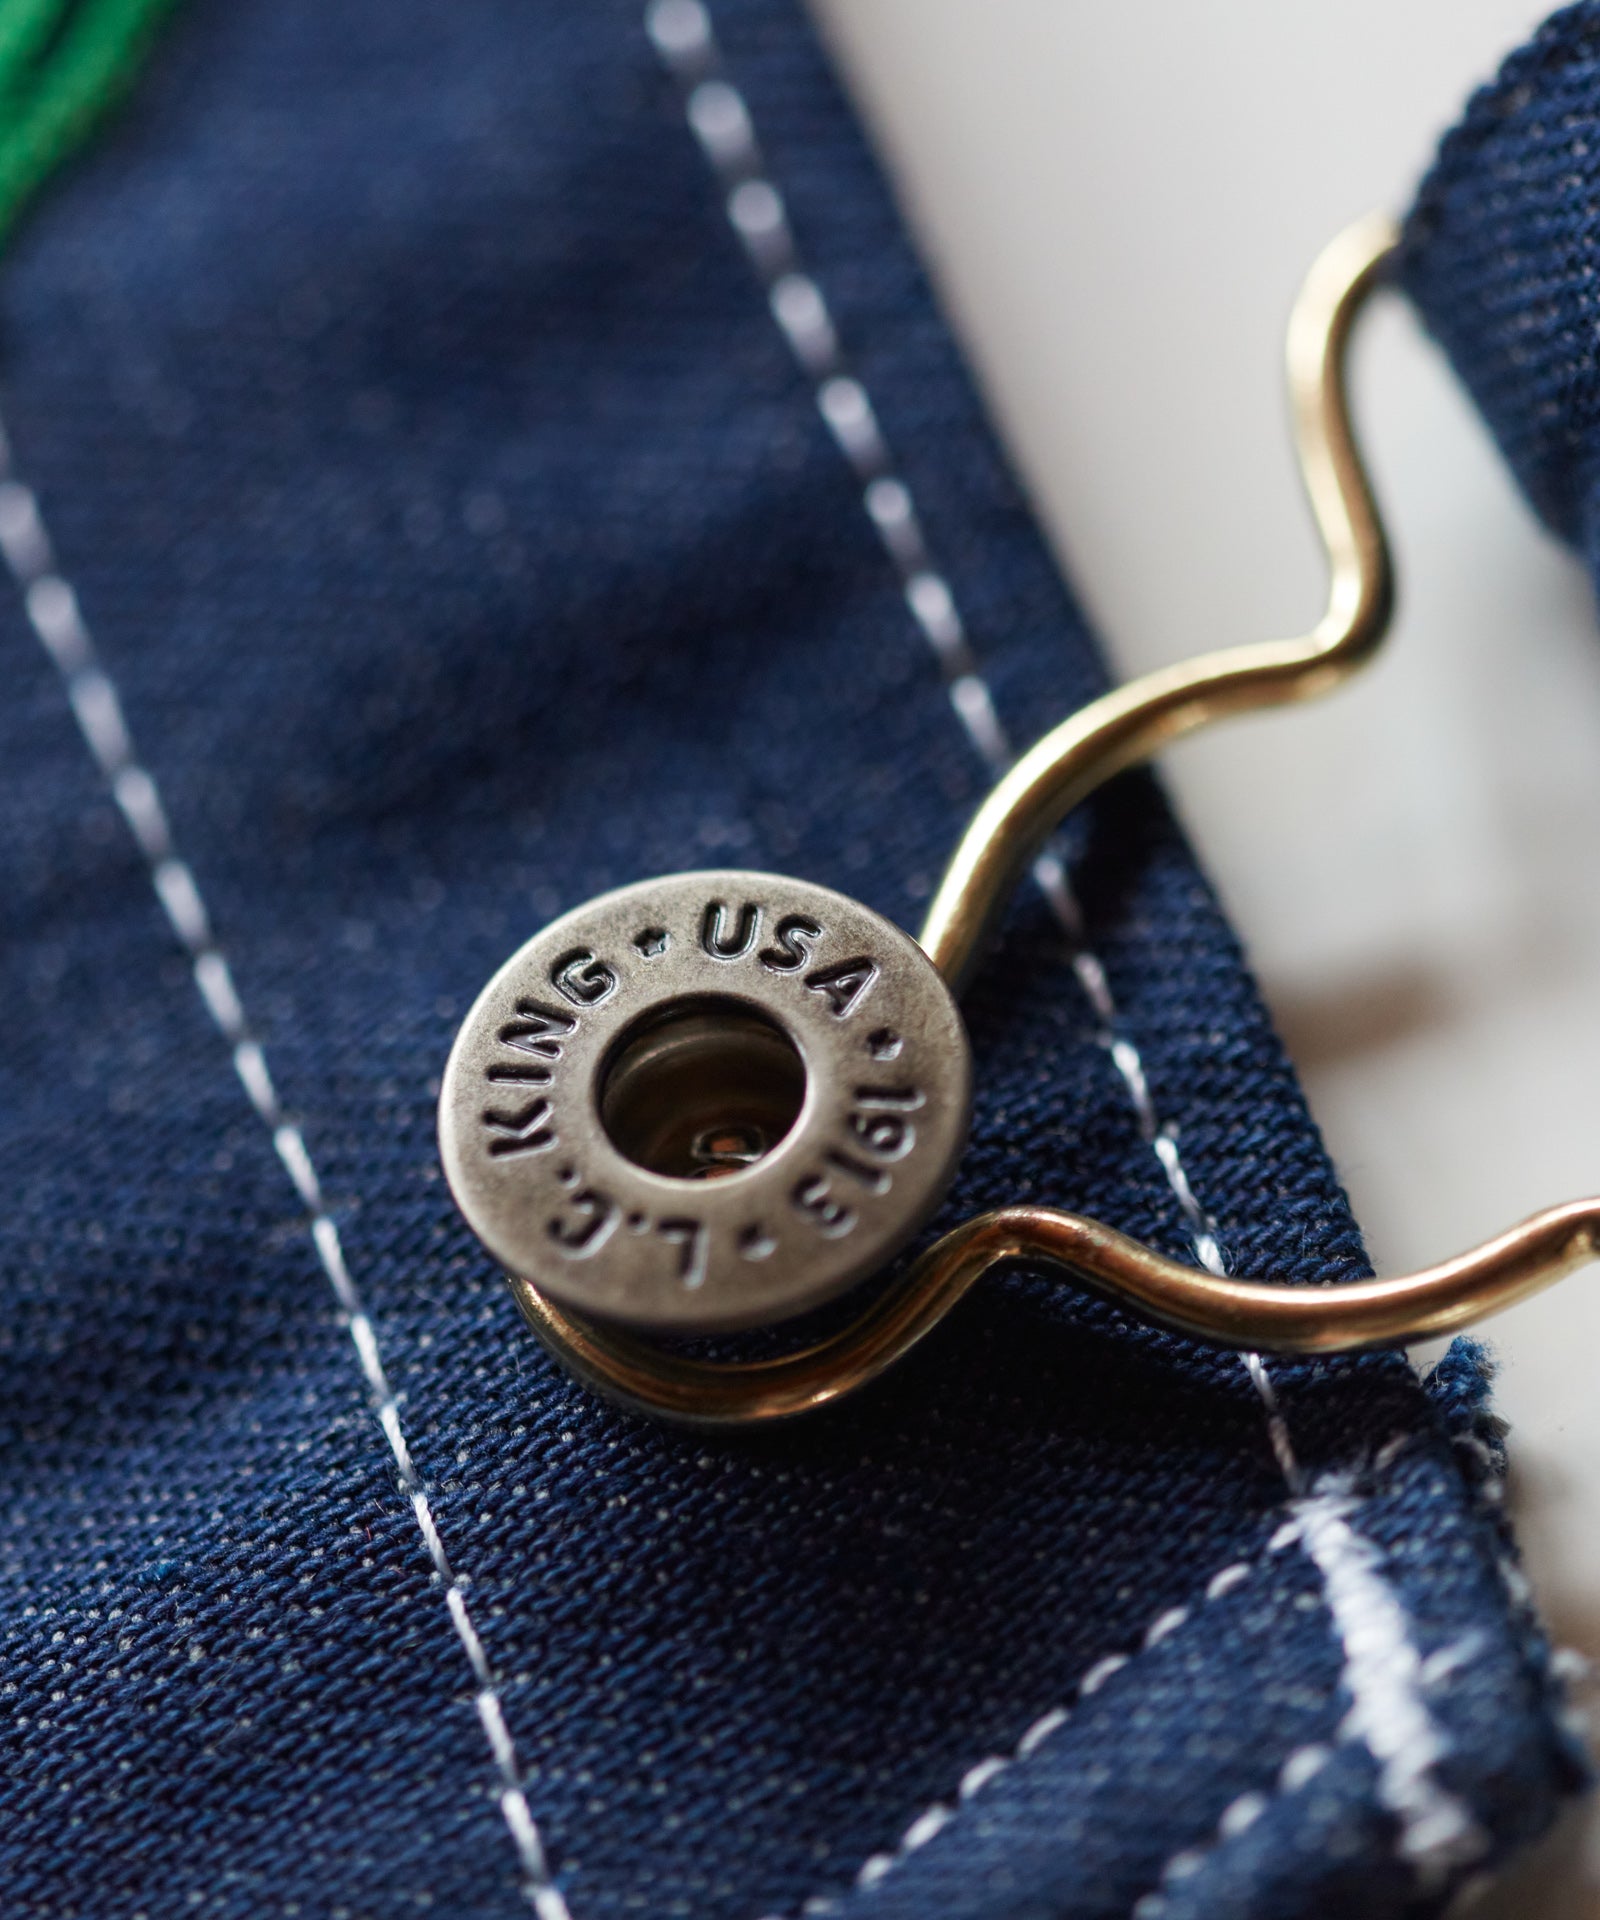 Pointer Brand Denim Low Back Overalls. 30x27. Made in the USA. Front Zipper  Pocket. Adjustable Suspenders. Zipper Front. Hand Pockets. -  UK